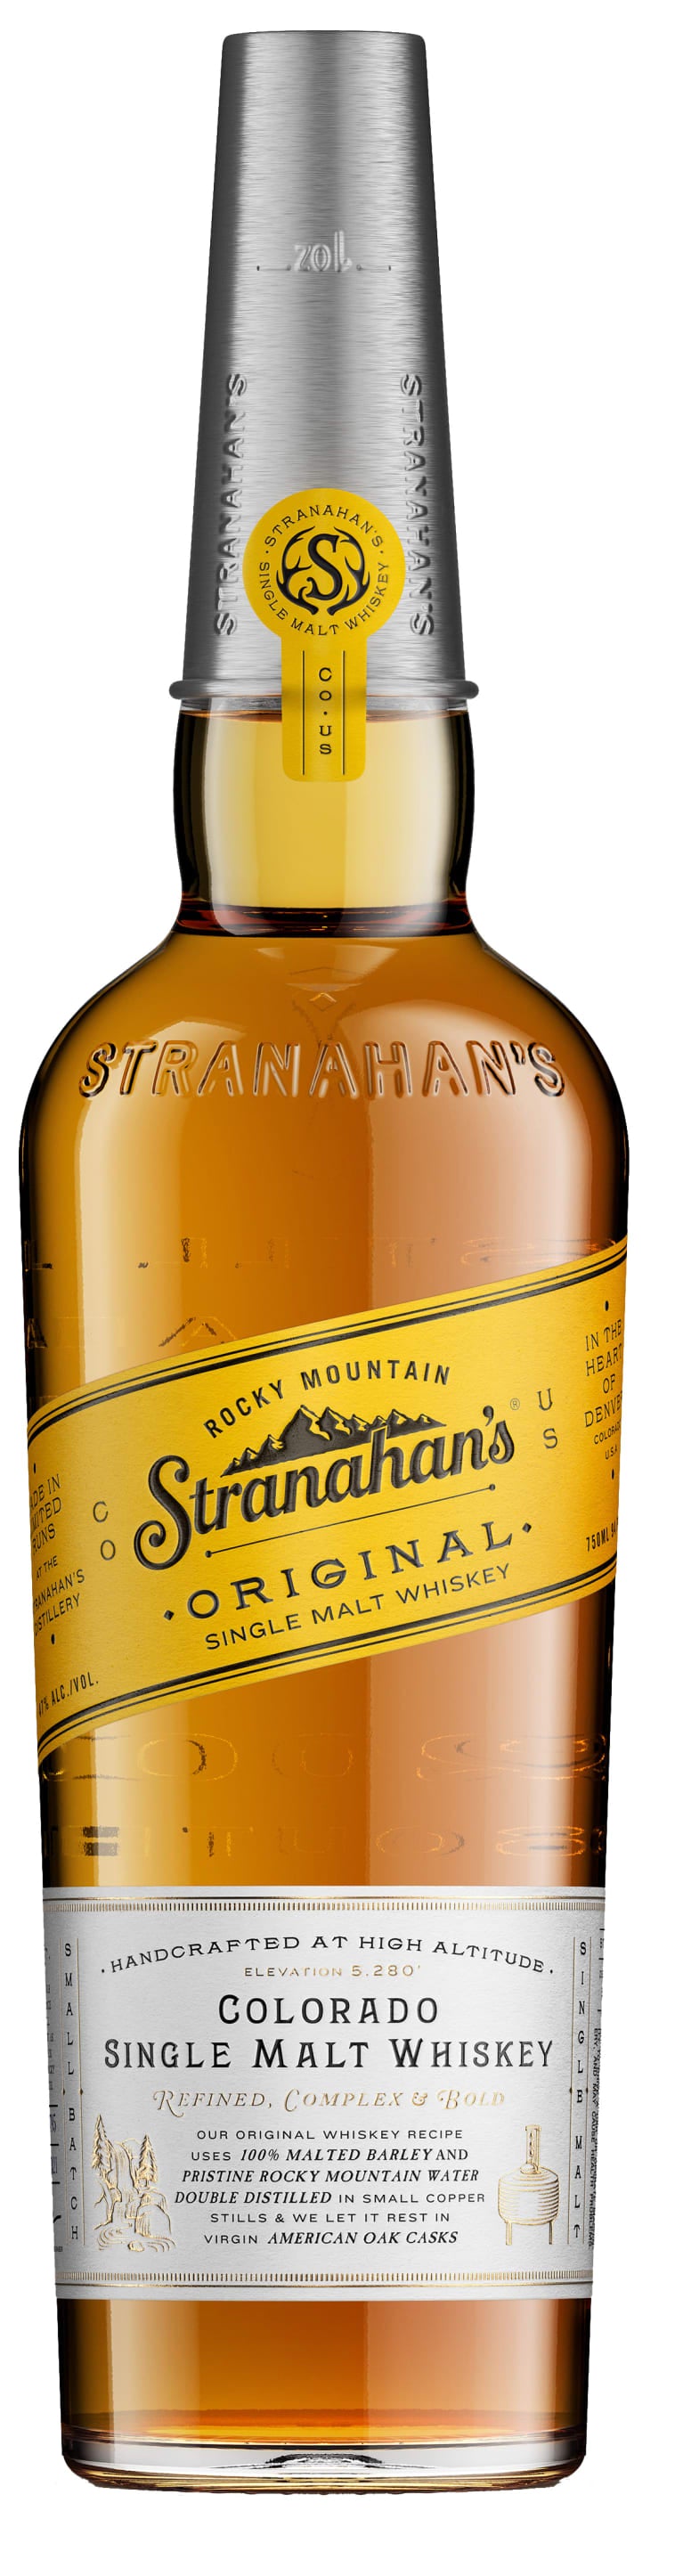 Stranahan's Original Single Malt Whiskey Colorado